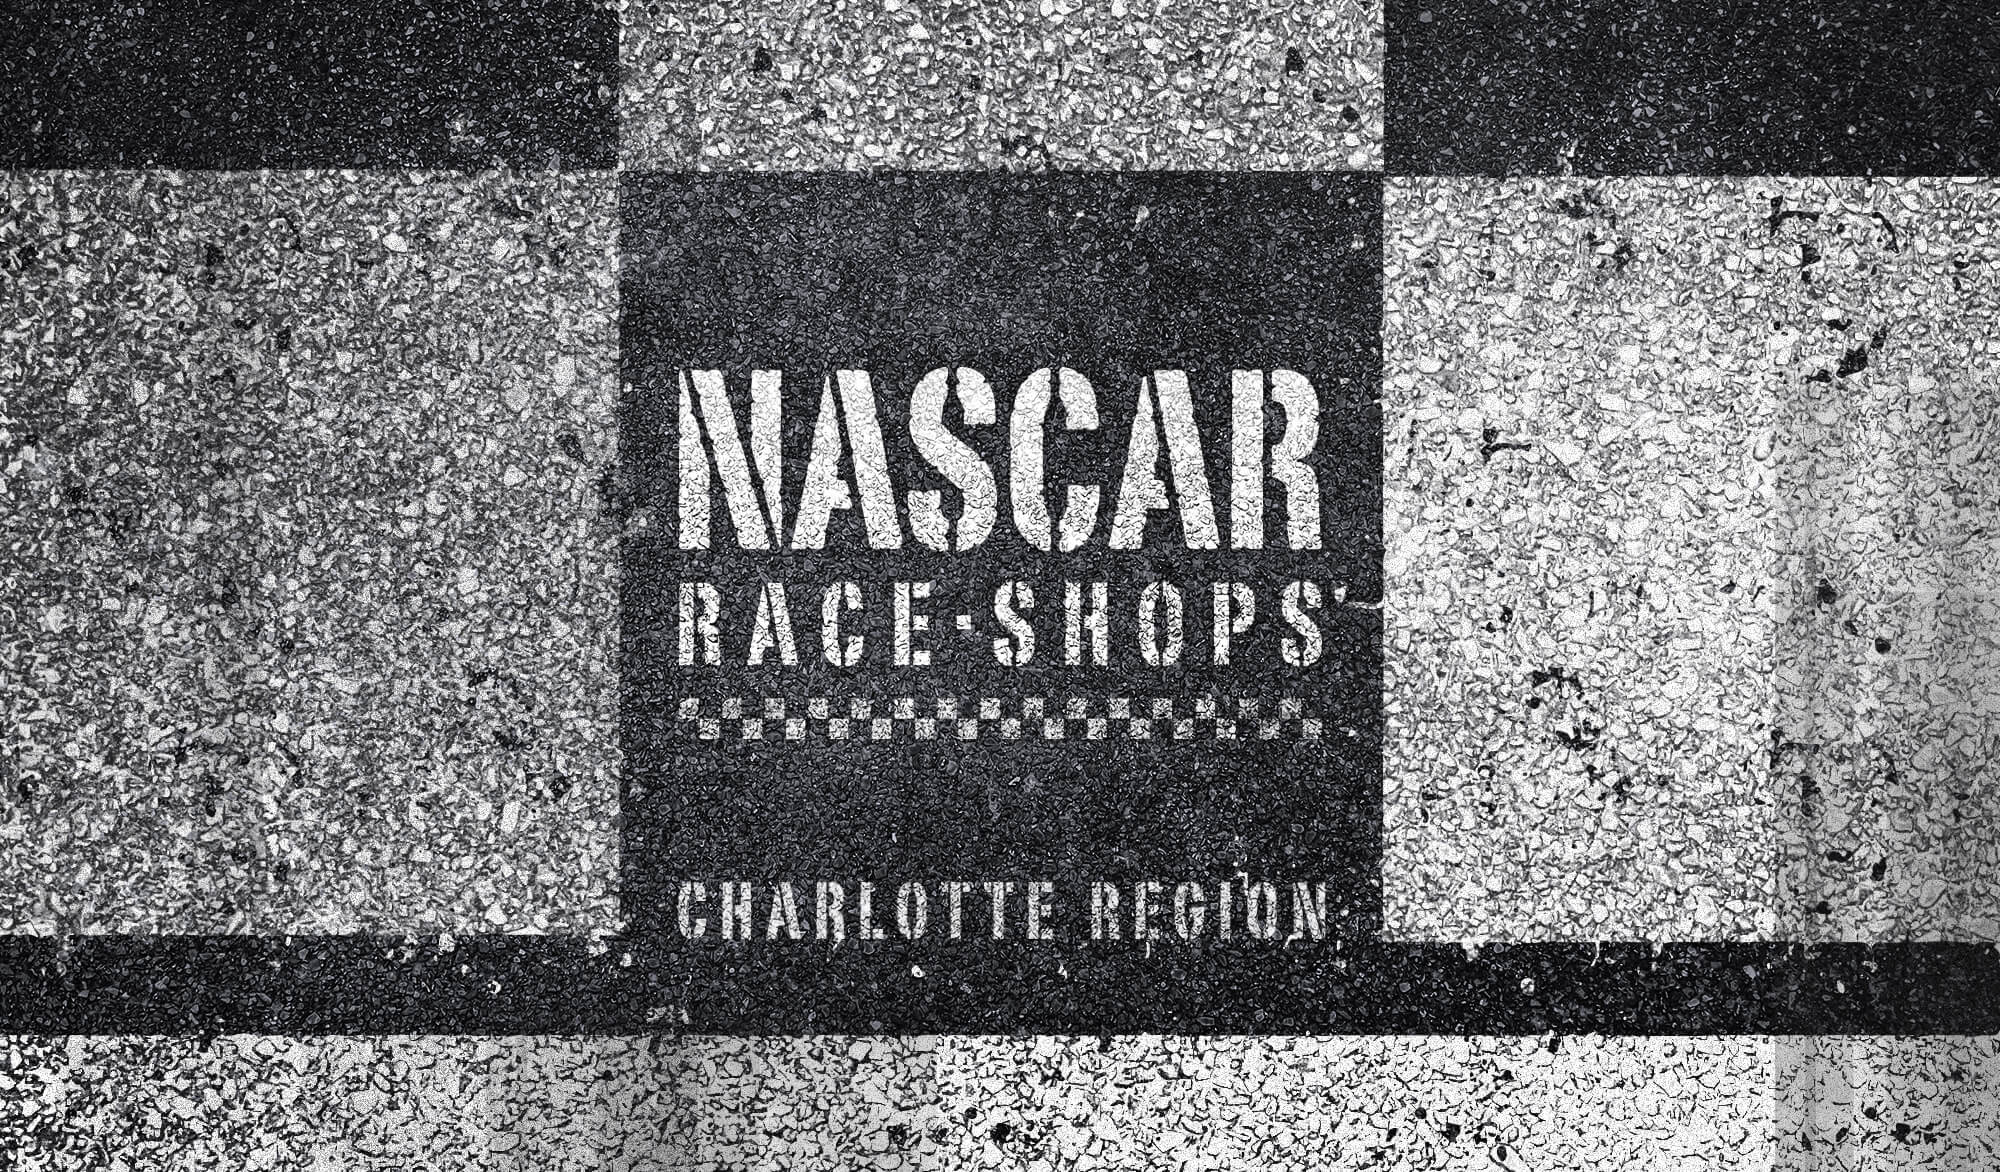 NASCAR Race Shops